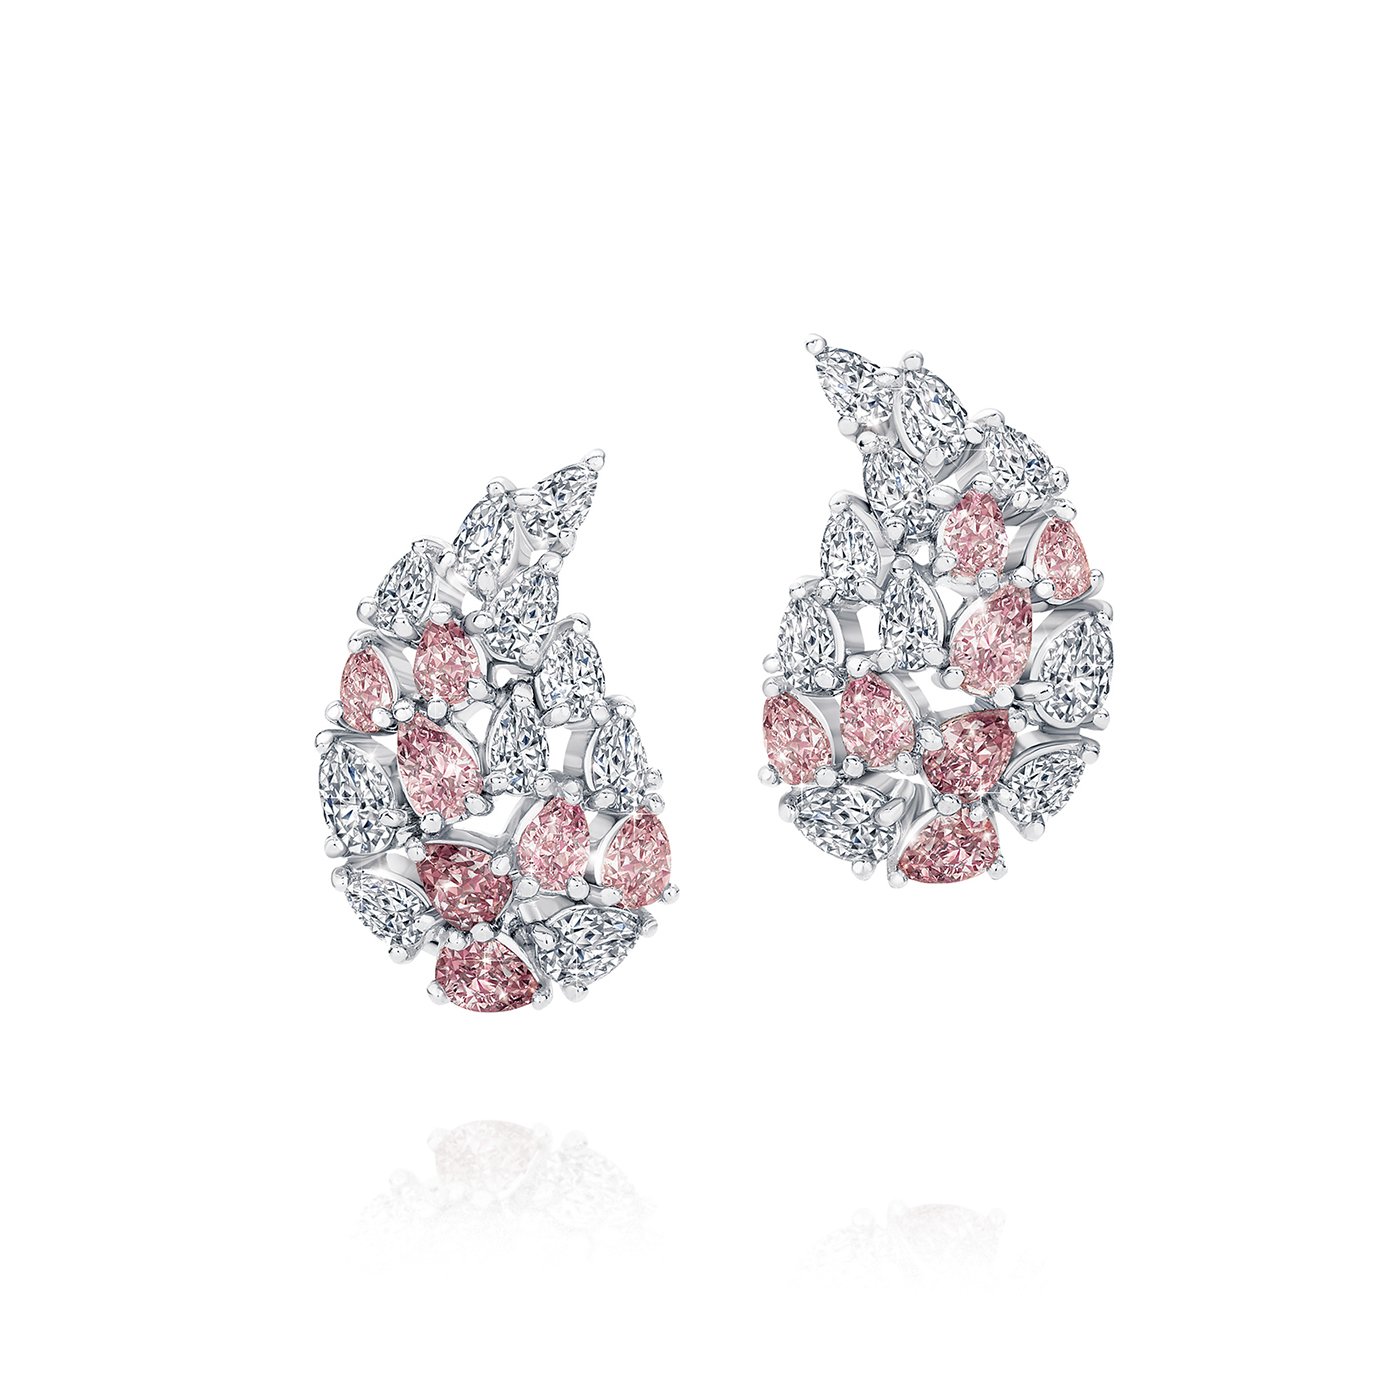 Calleija Emma Lily Earrings in Argyle Pink & White Diamond Earrings.jpg